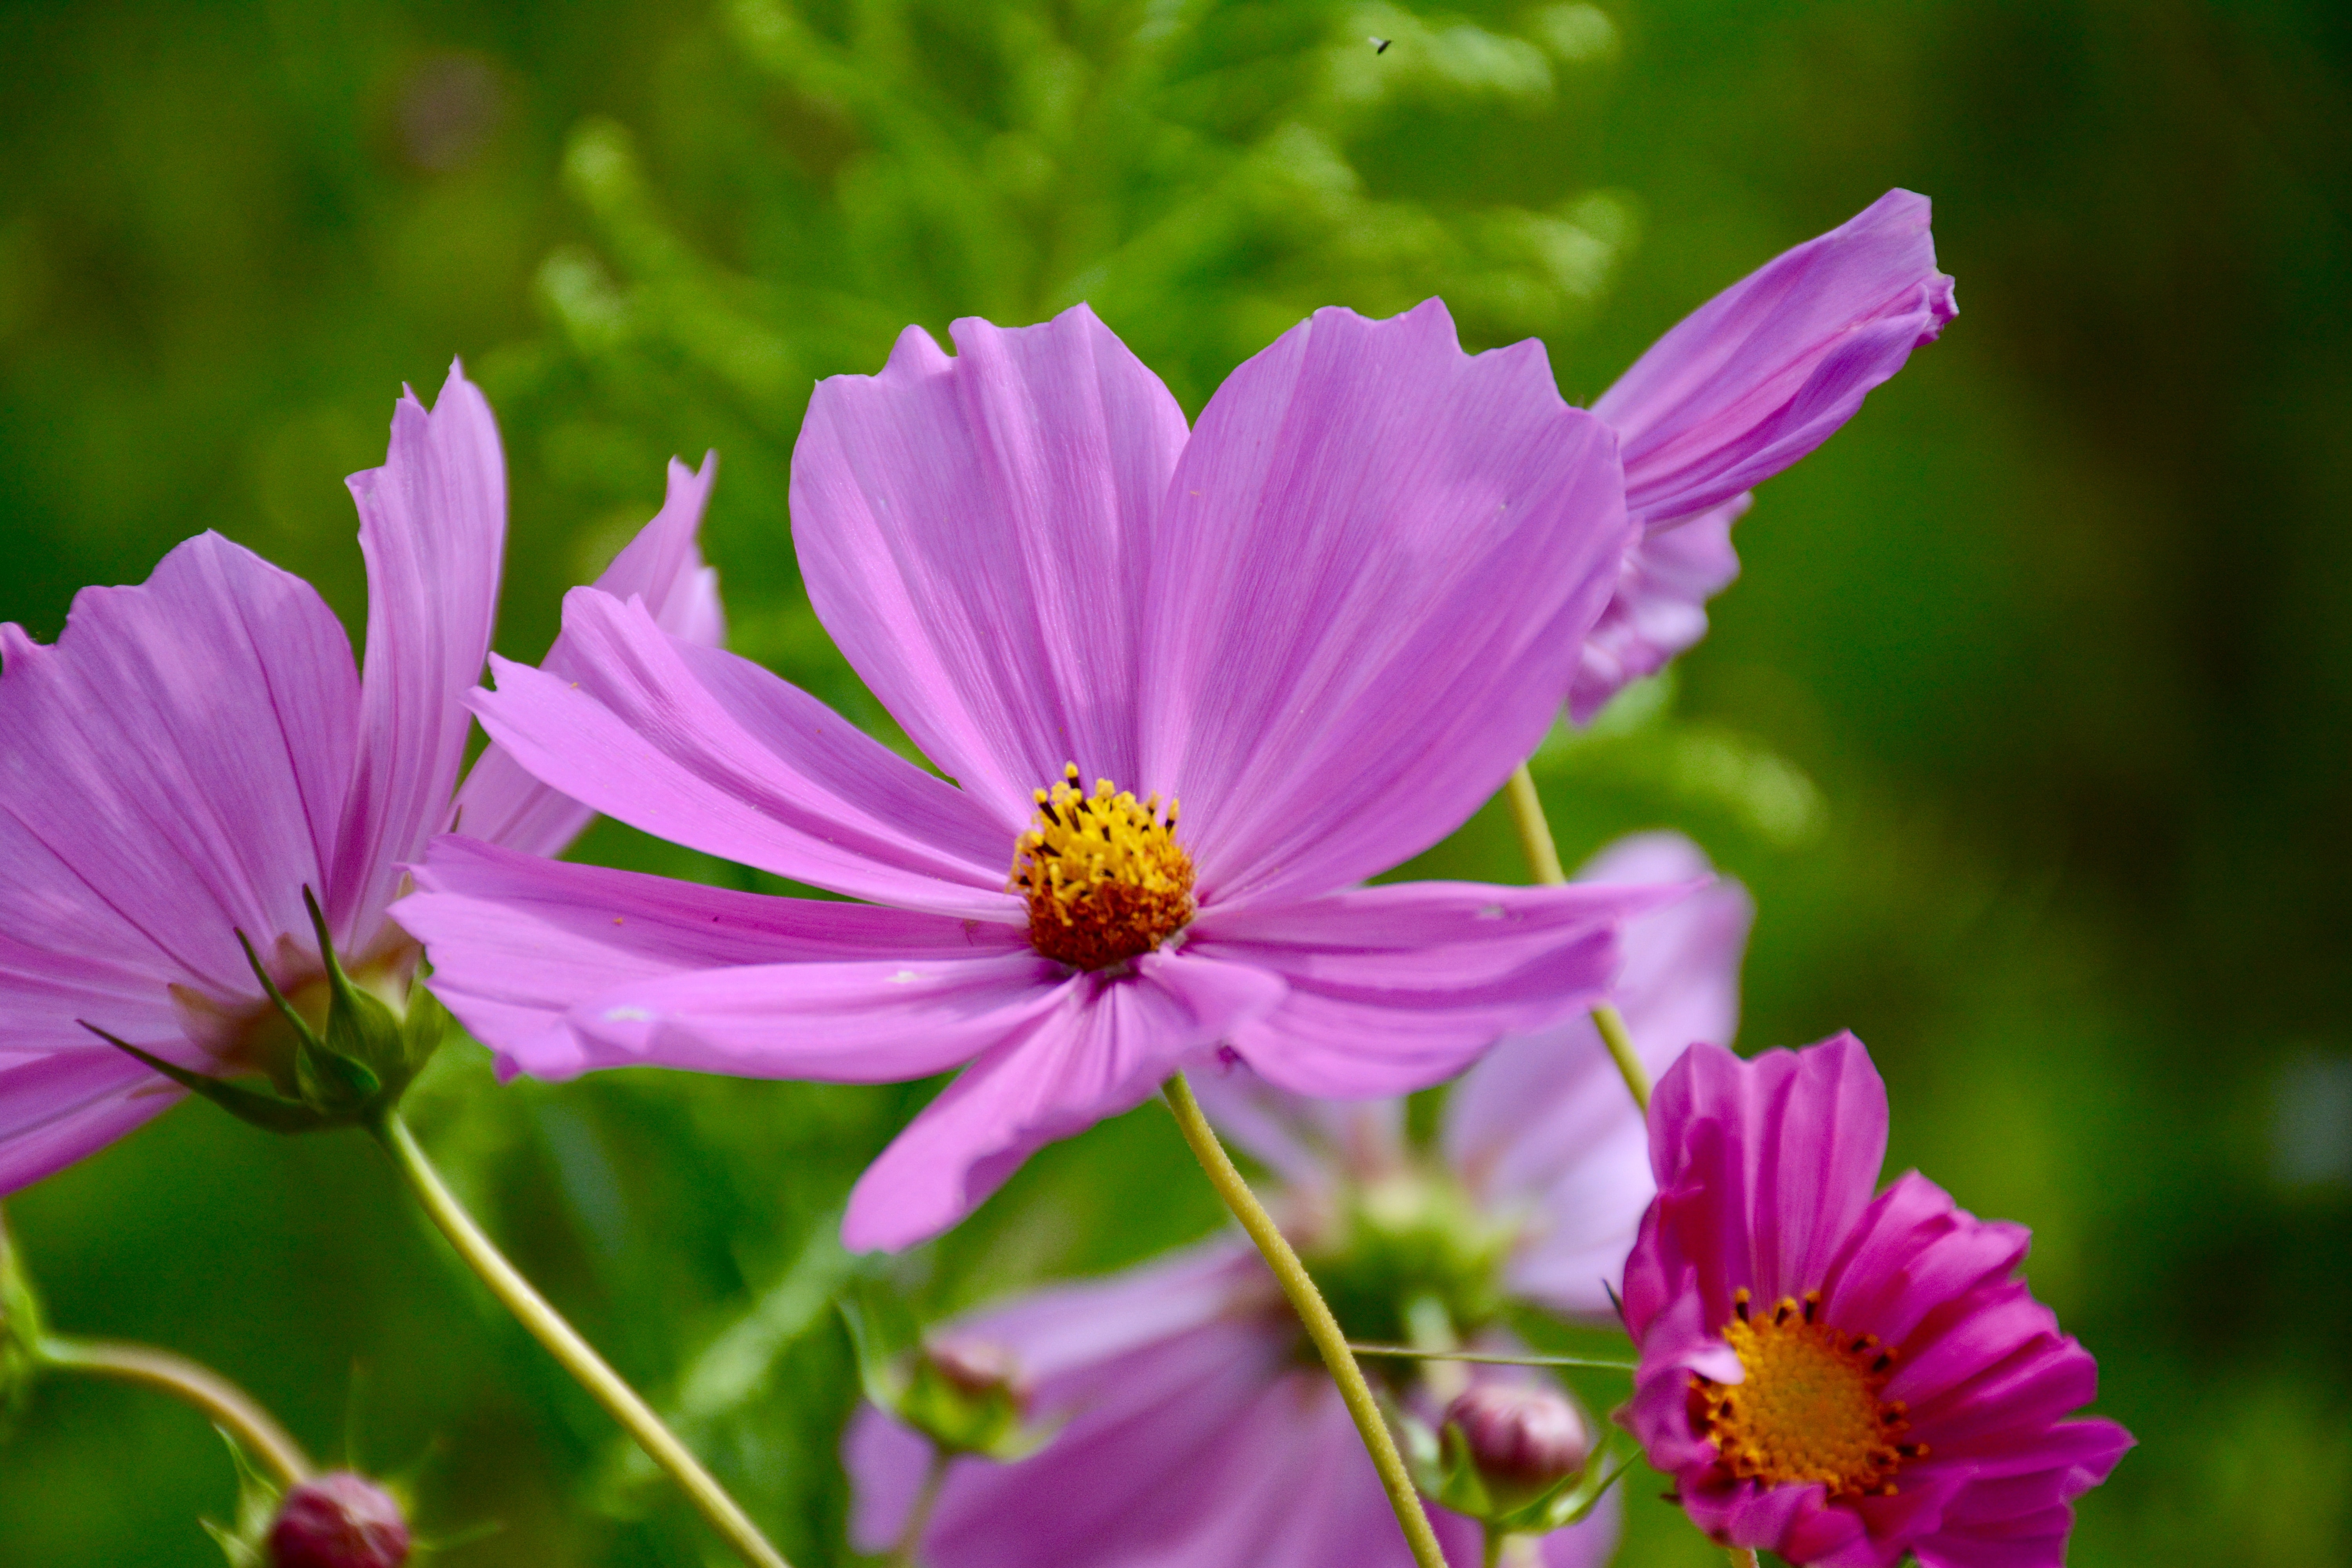 Purple cosmos flower in closeup photo